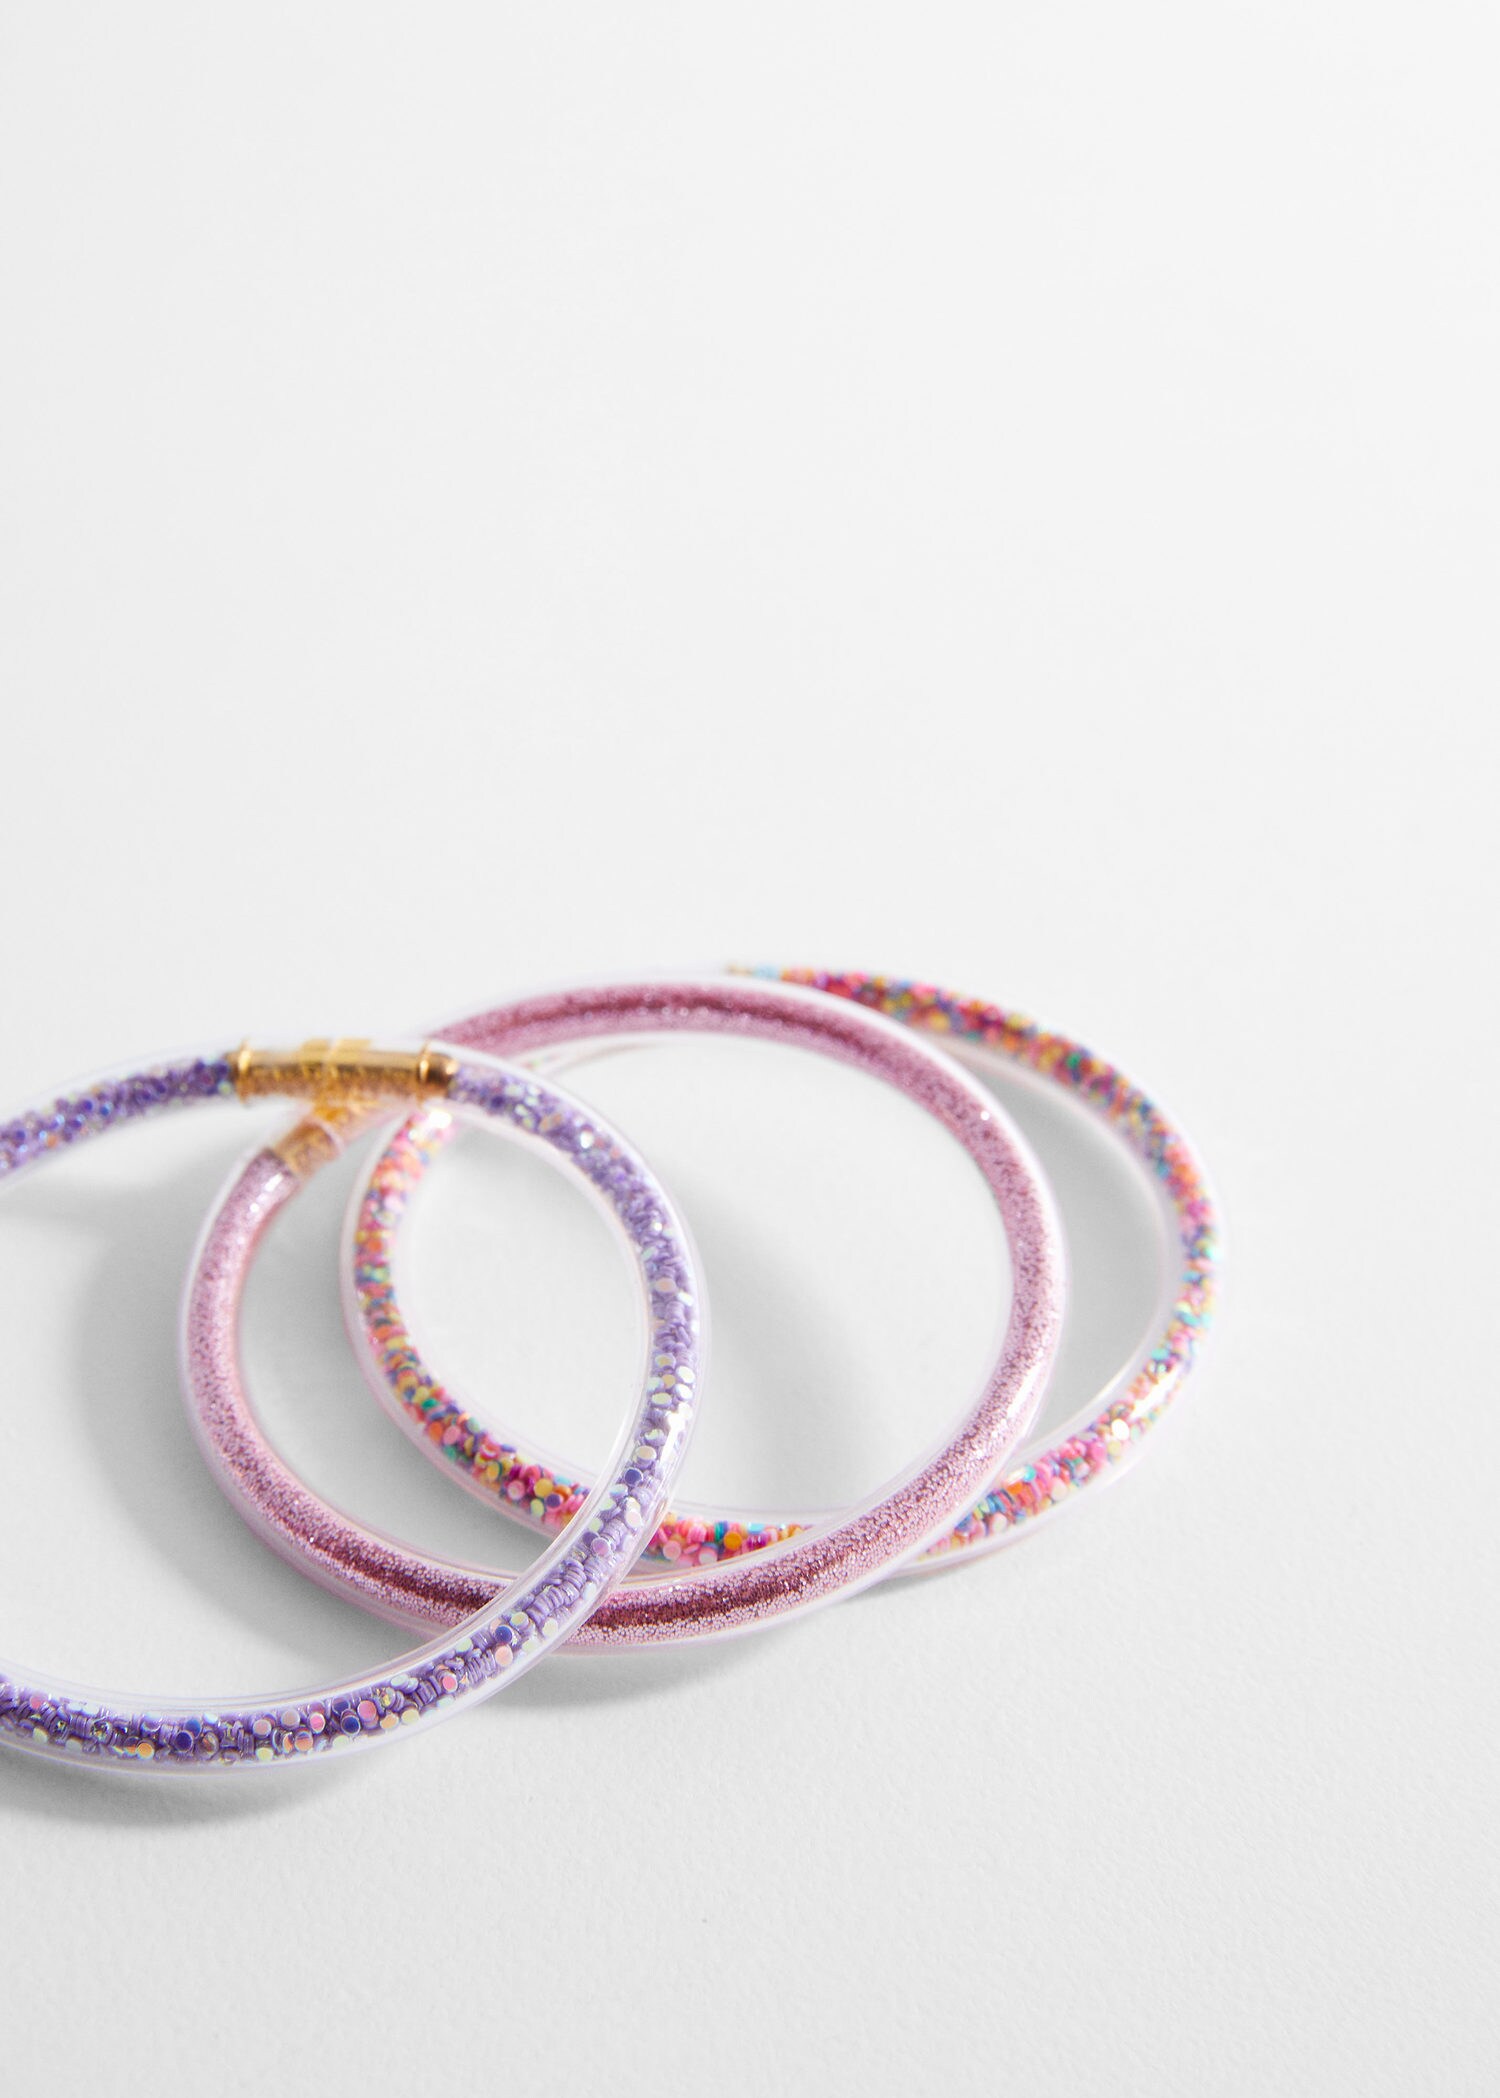 Personalized Name Bracelets • Petra Slay Design